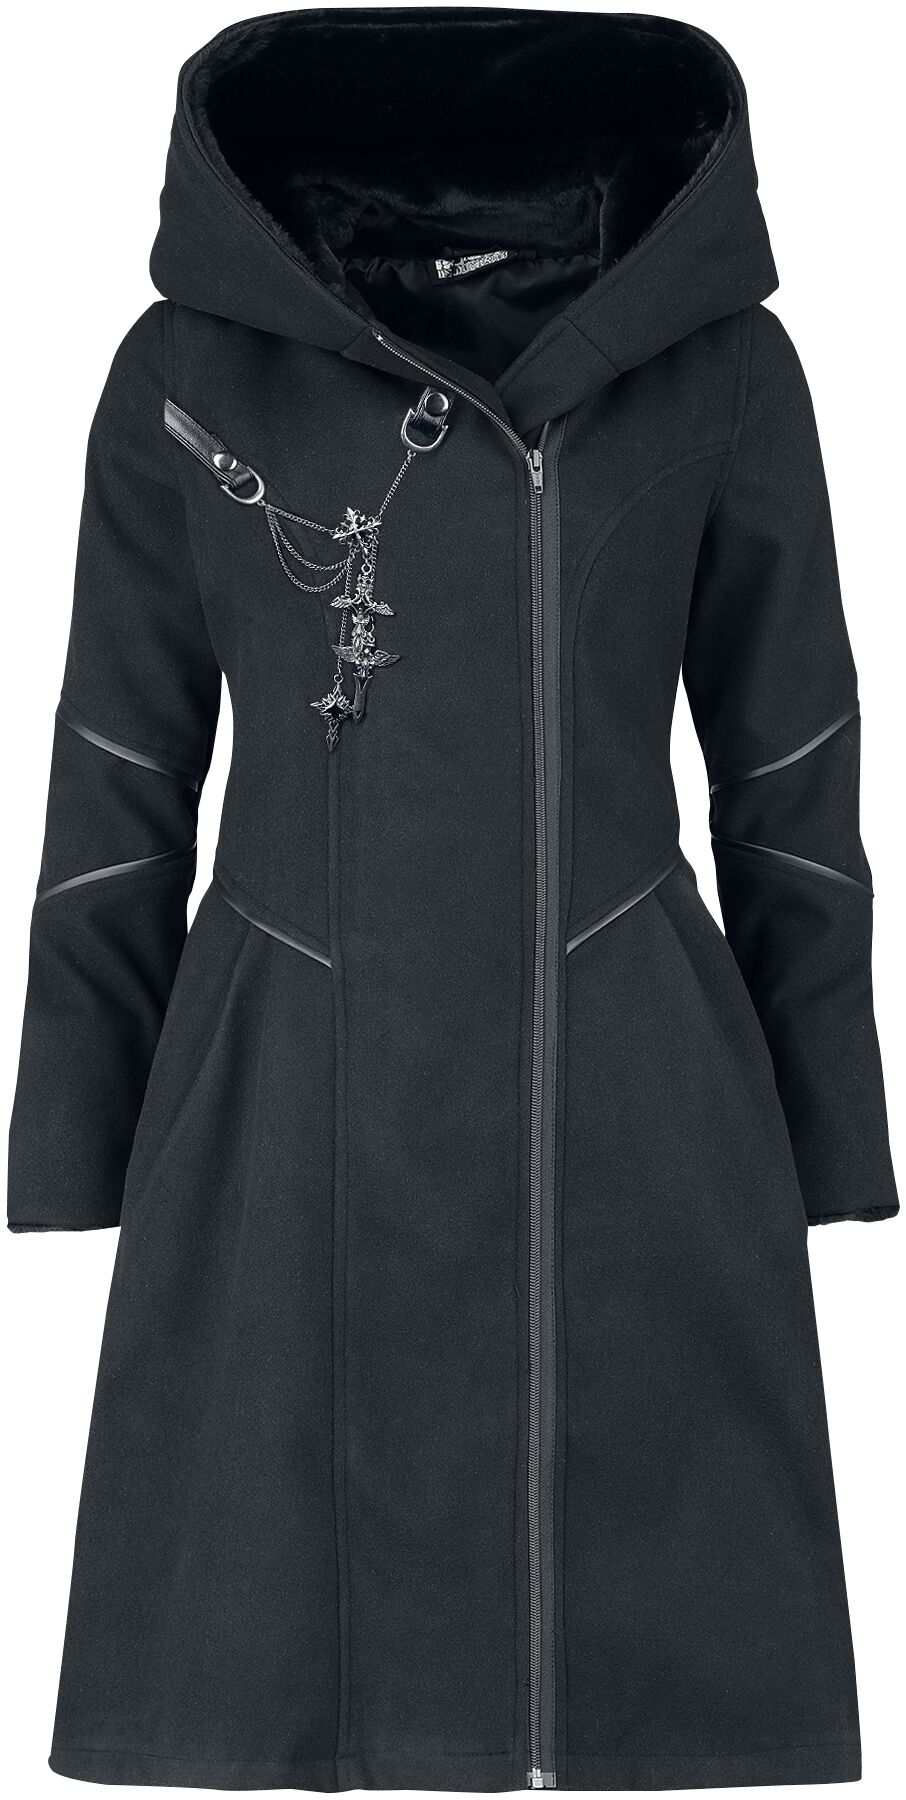 Poizen Industries Possession coat Coats black